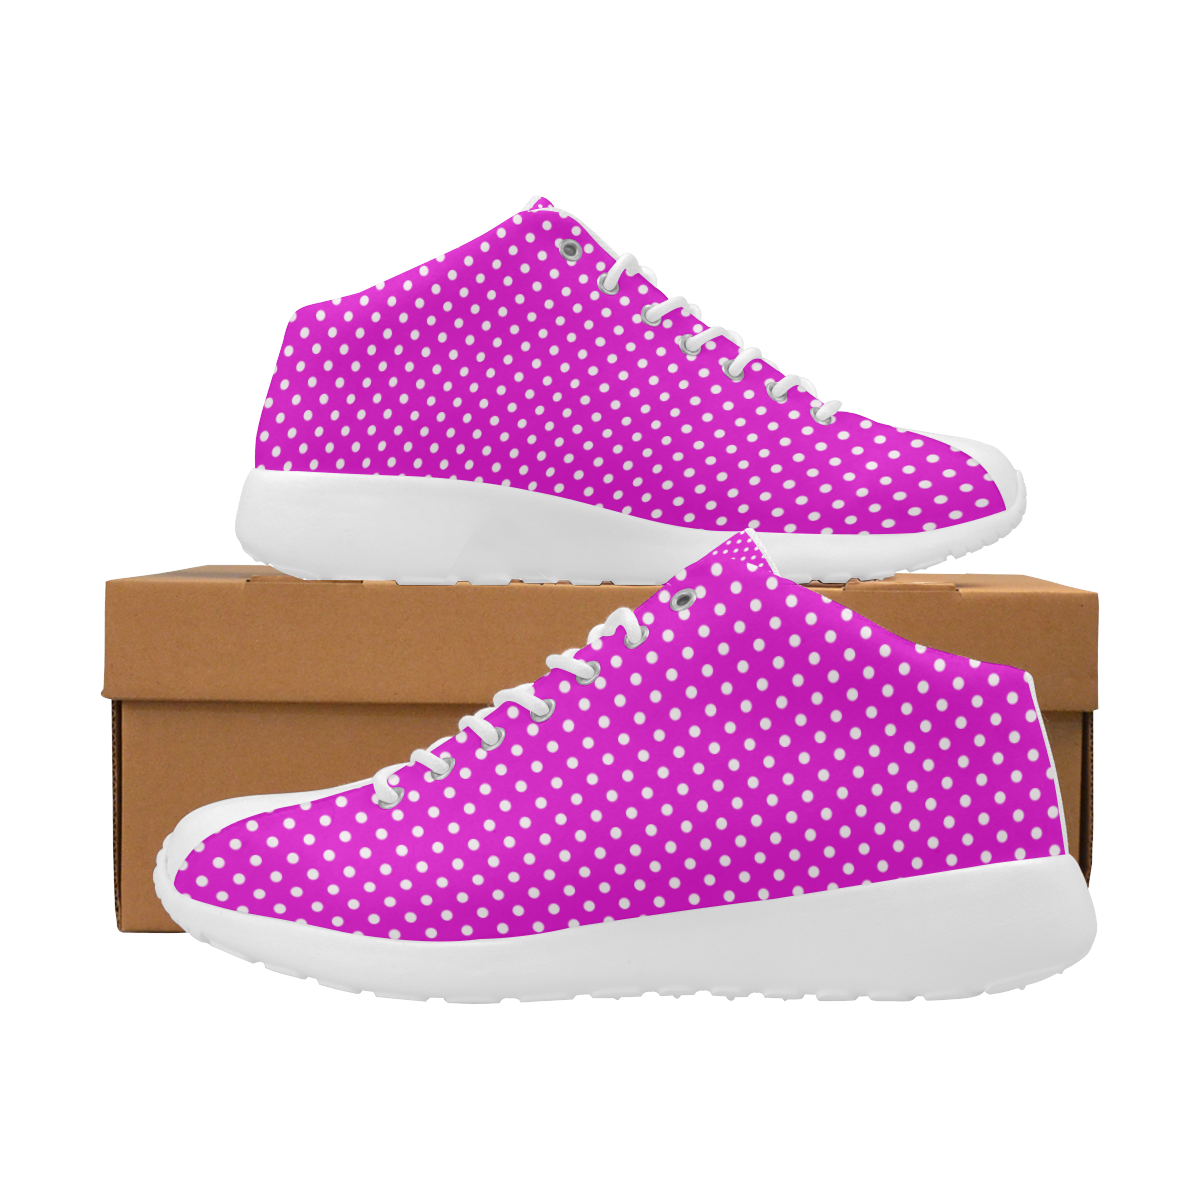 Pink polka dots Women's Basketball Training Shoes (Model 47502)